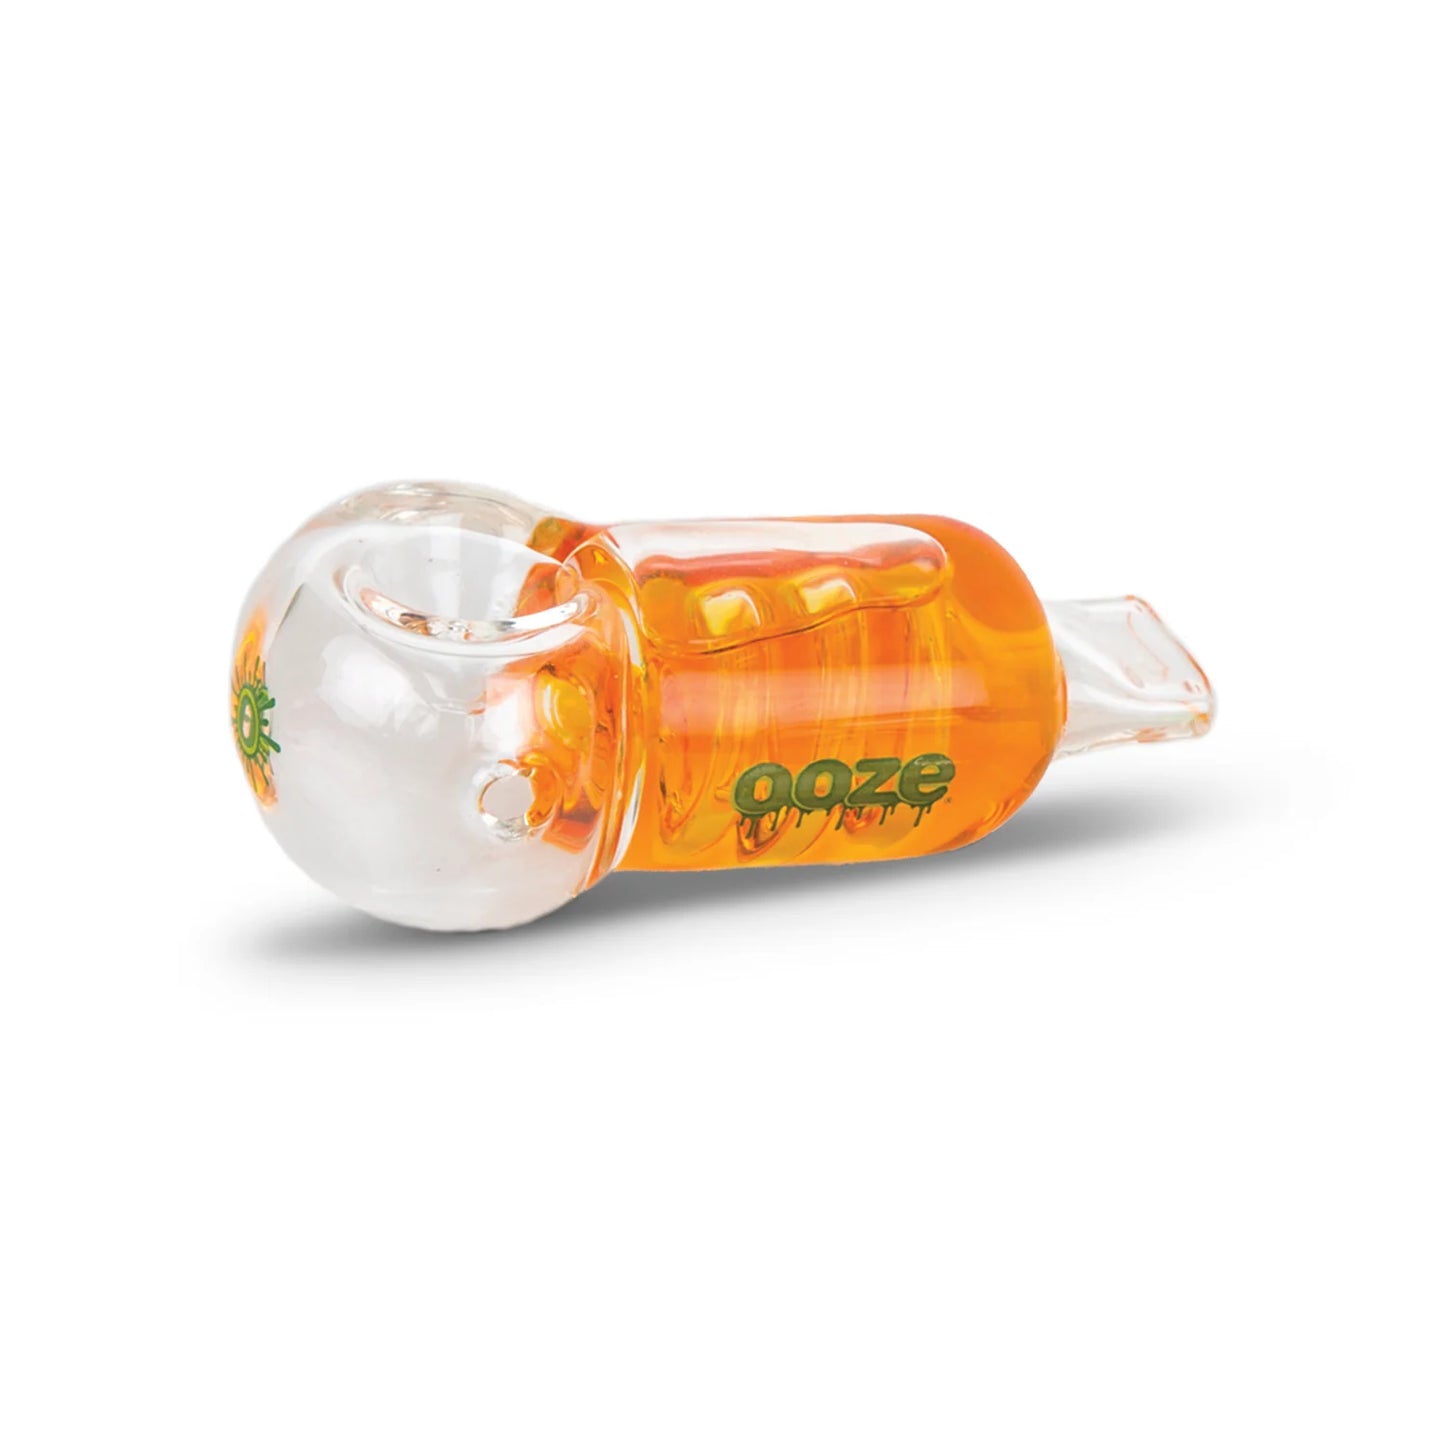 Ooze Cryo Glycerin Glass Bowl - Freezable Orange